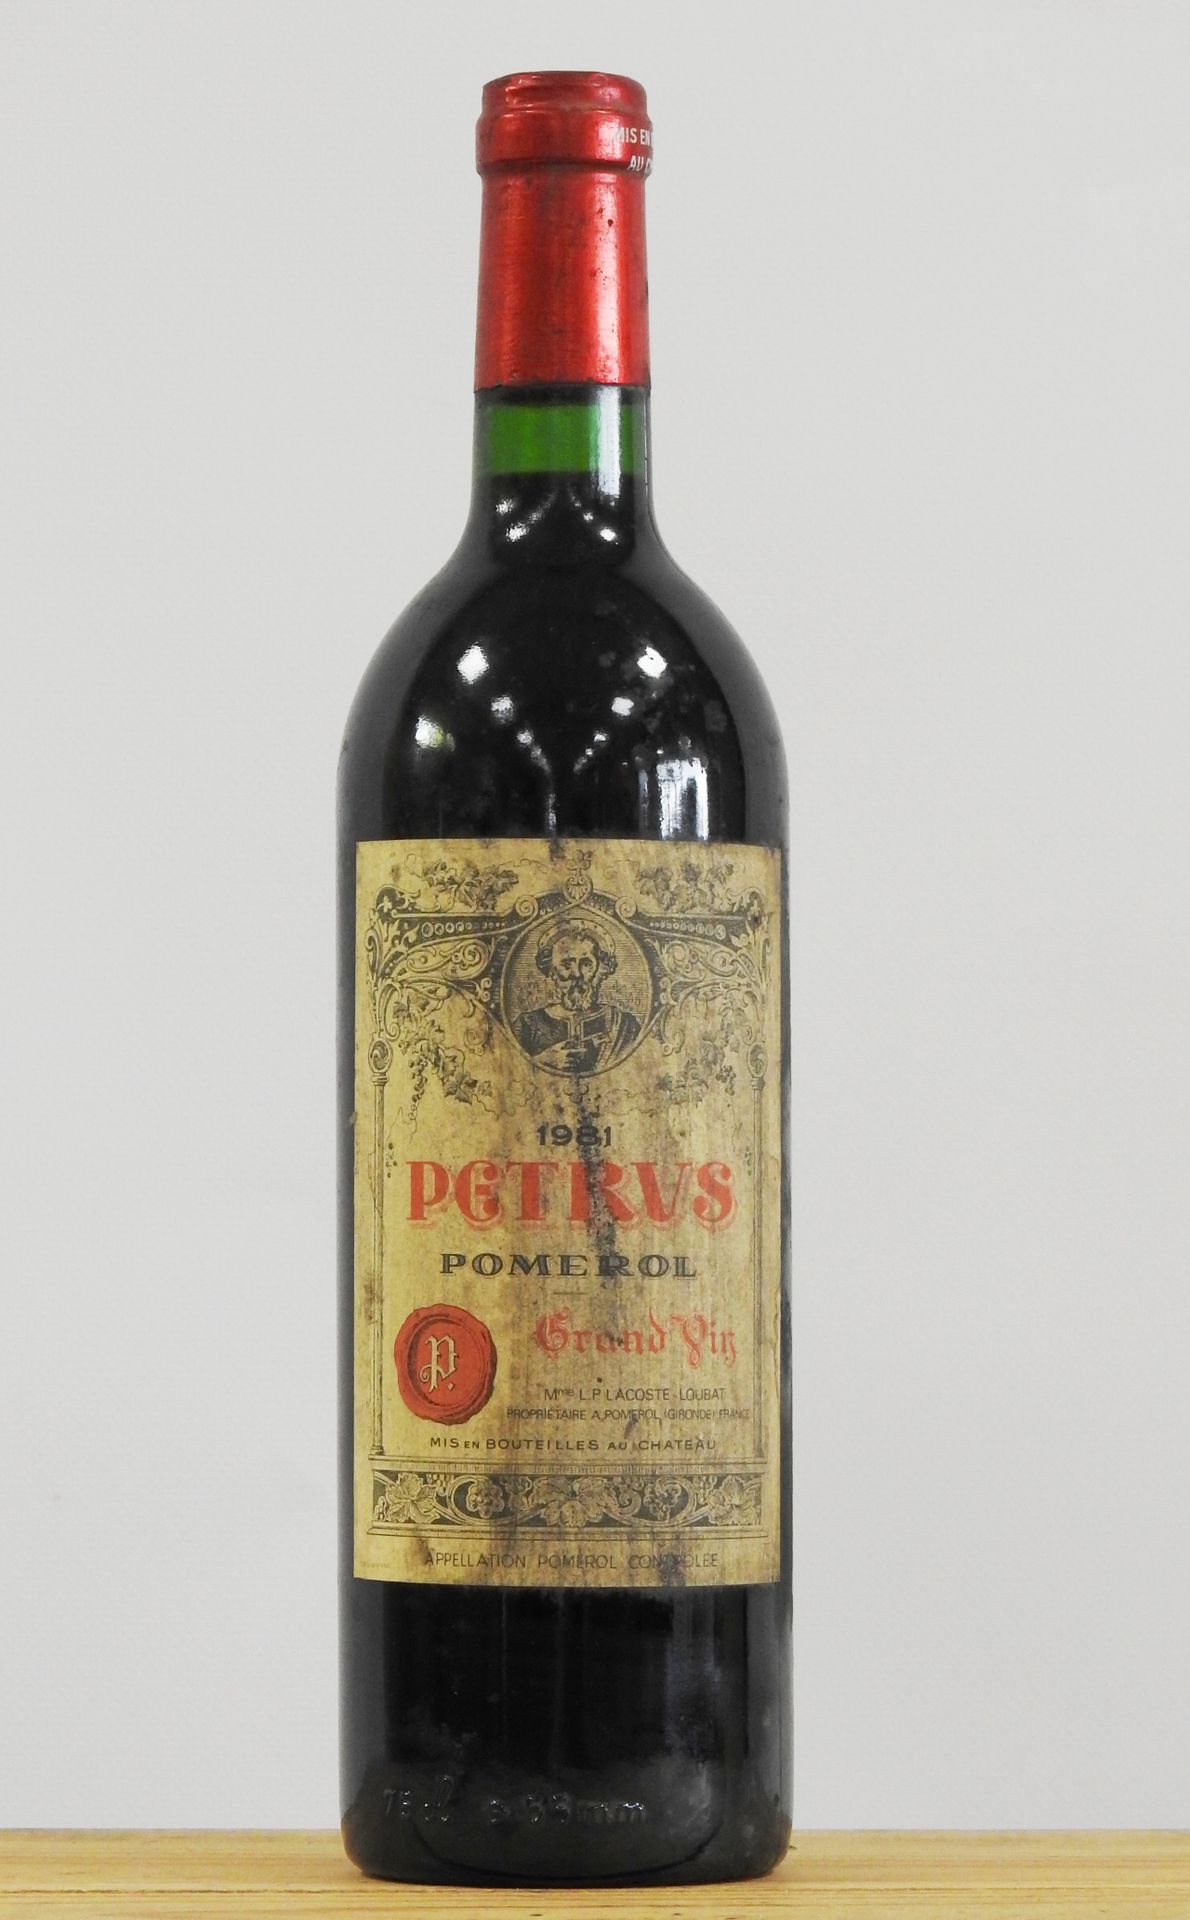 Null 
1 botella

Petrus

1981

Pomerol

Buen nivel

Etiqueta manchada, desgastad&hellip;